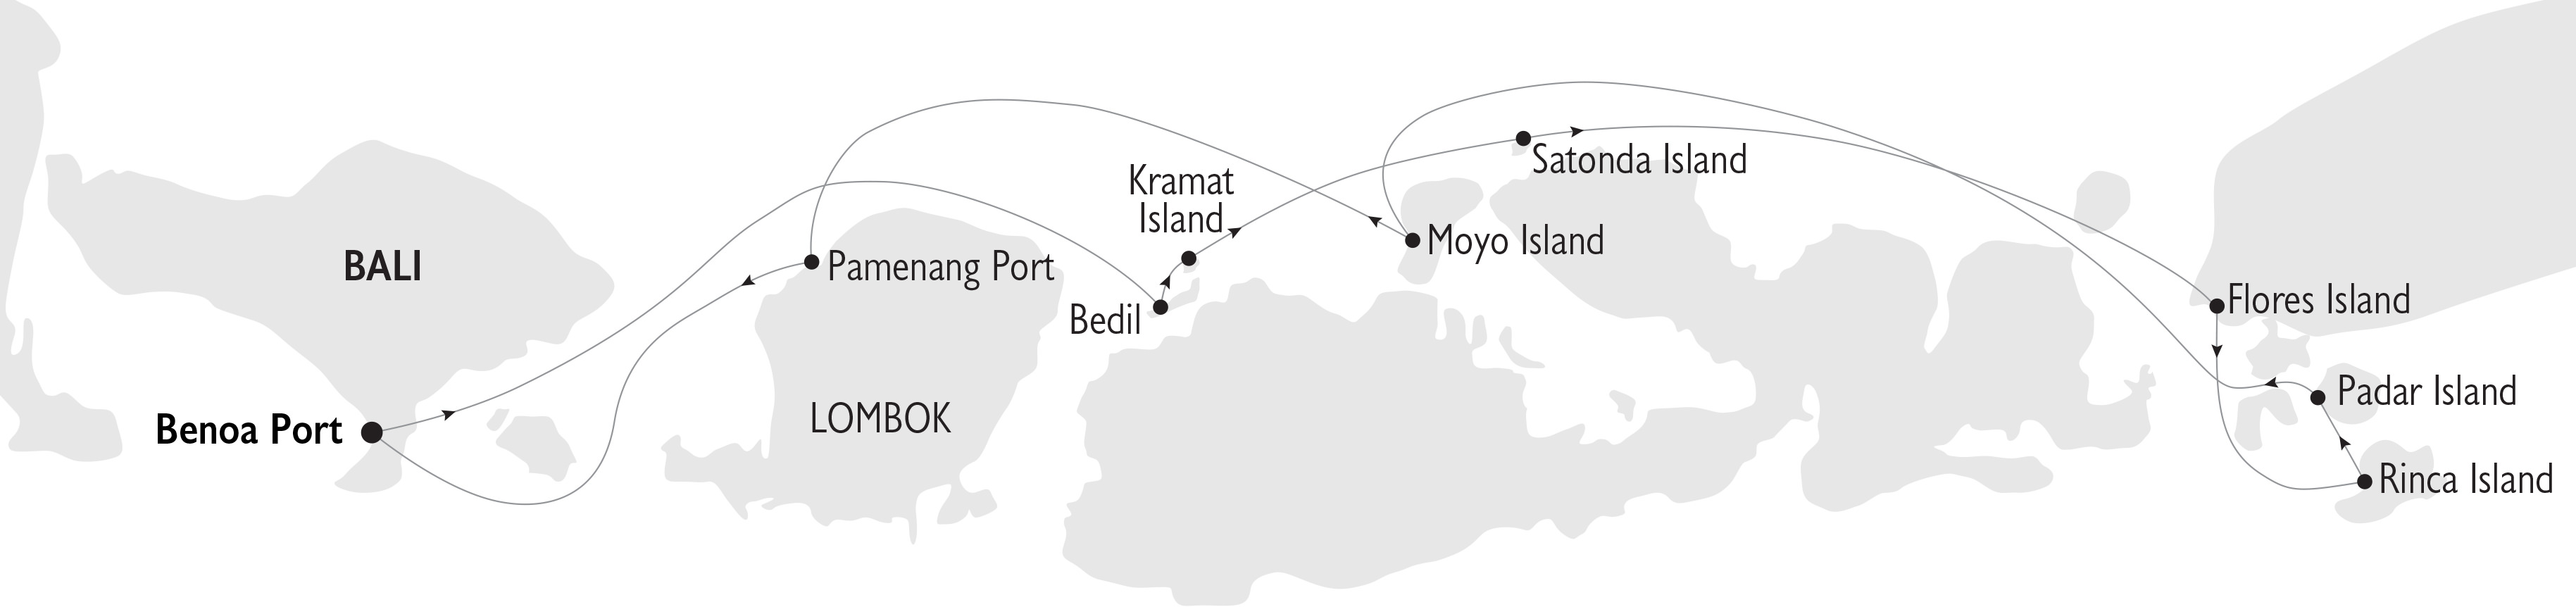 Bali cruise private plan